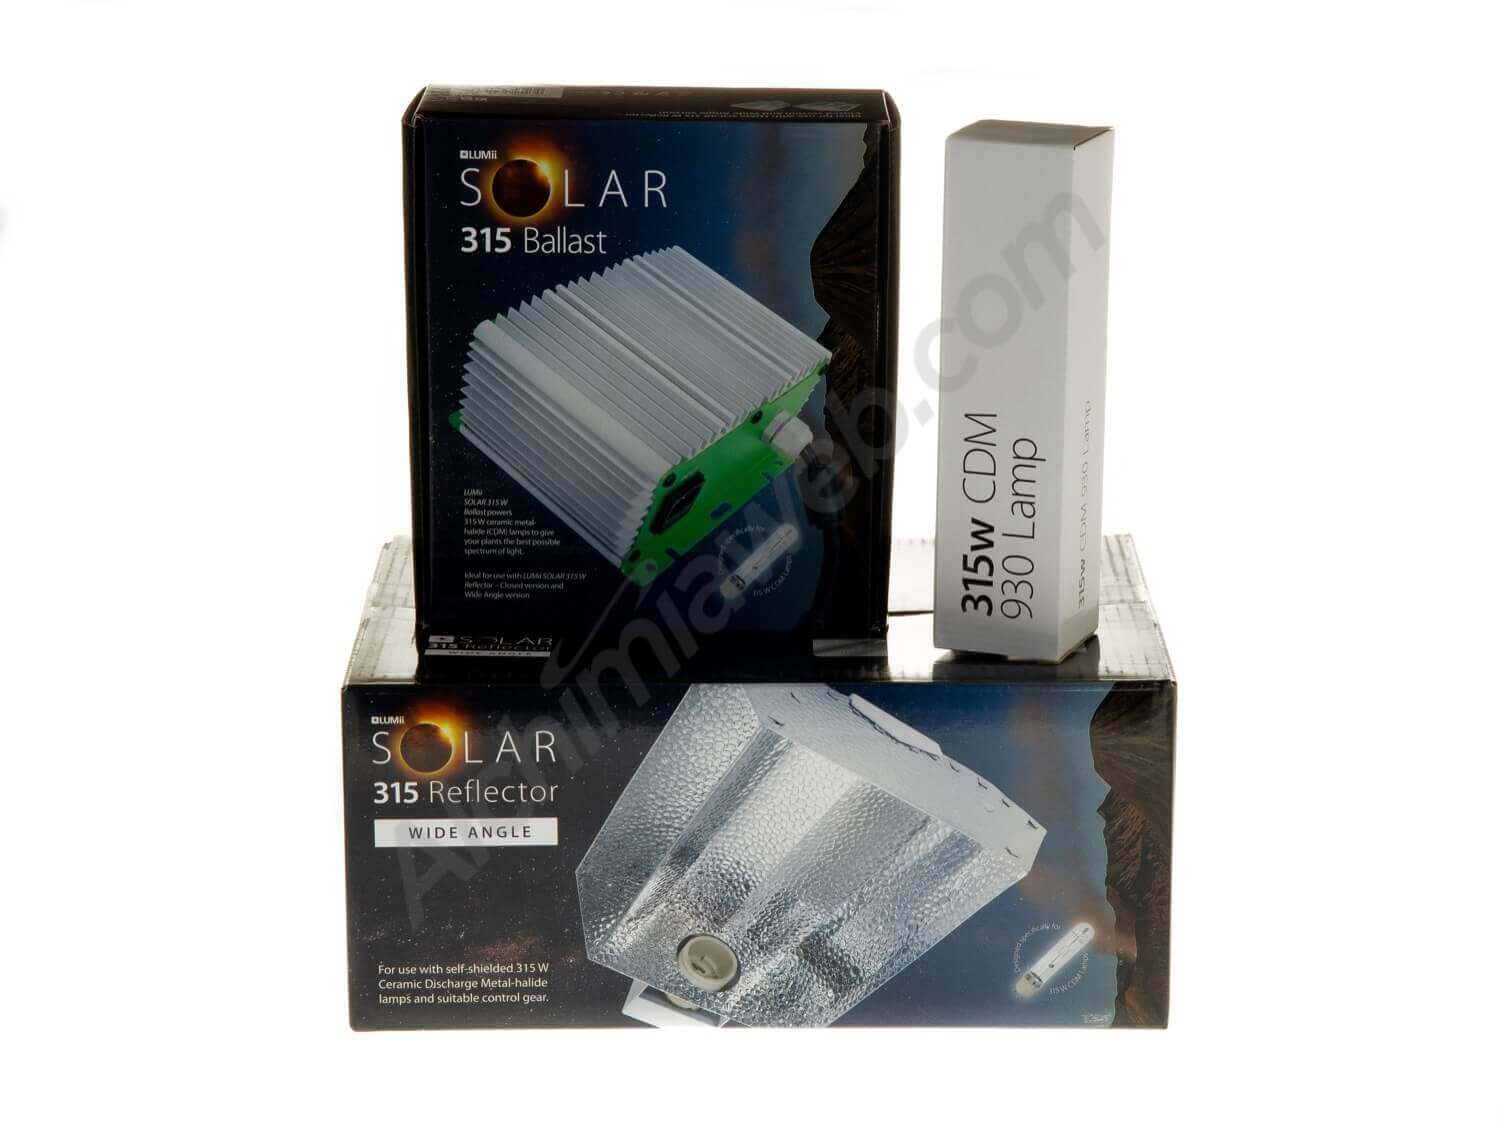 LUMii SOLAR 315 W Wide Or Close Reflector Light Kits With Lumii Or Philips Bulbs 